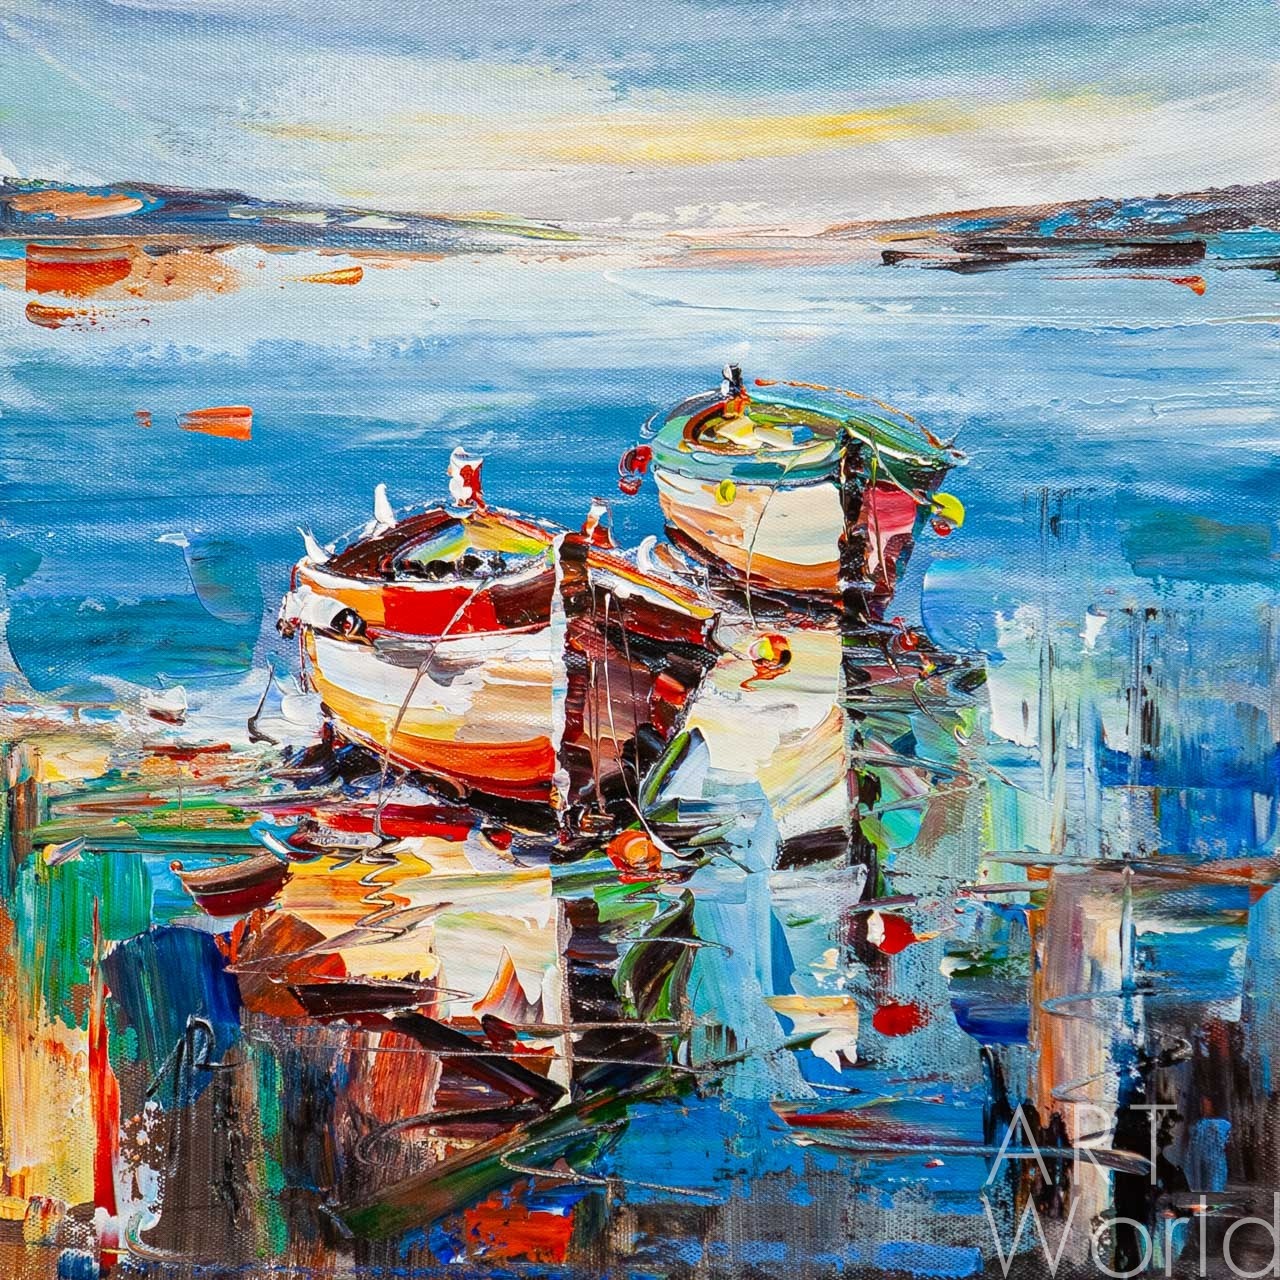 картина масло холст Картина маслом "Лодки на средиземноморском побережье", Родригес Хосе, LegacyArt Артворлд.ру